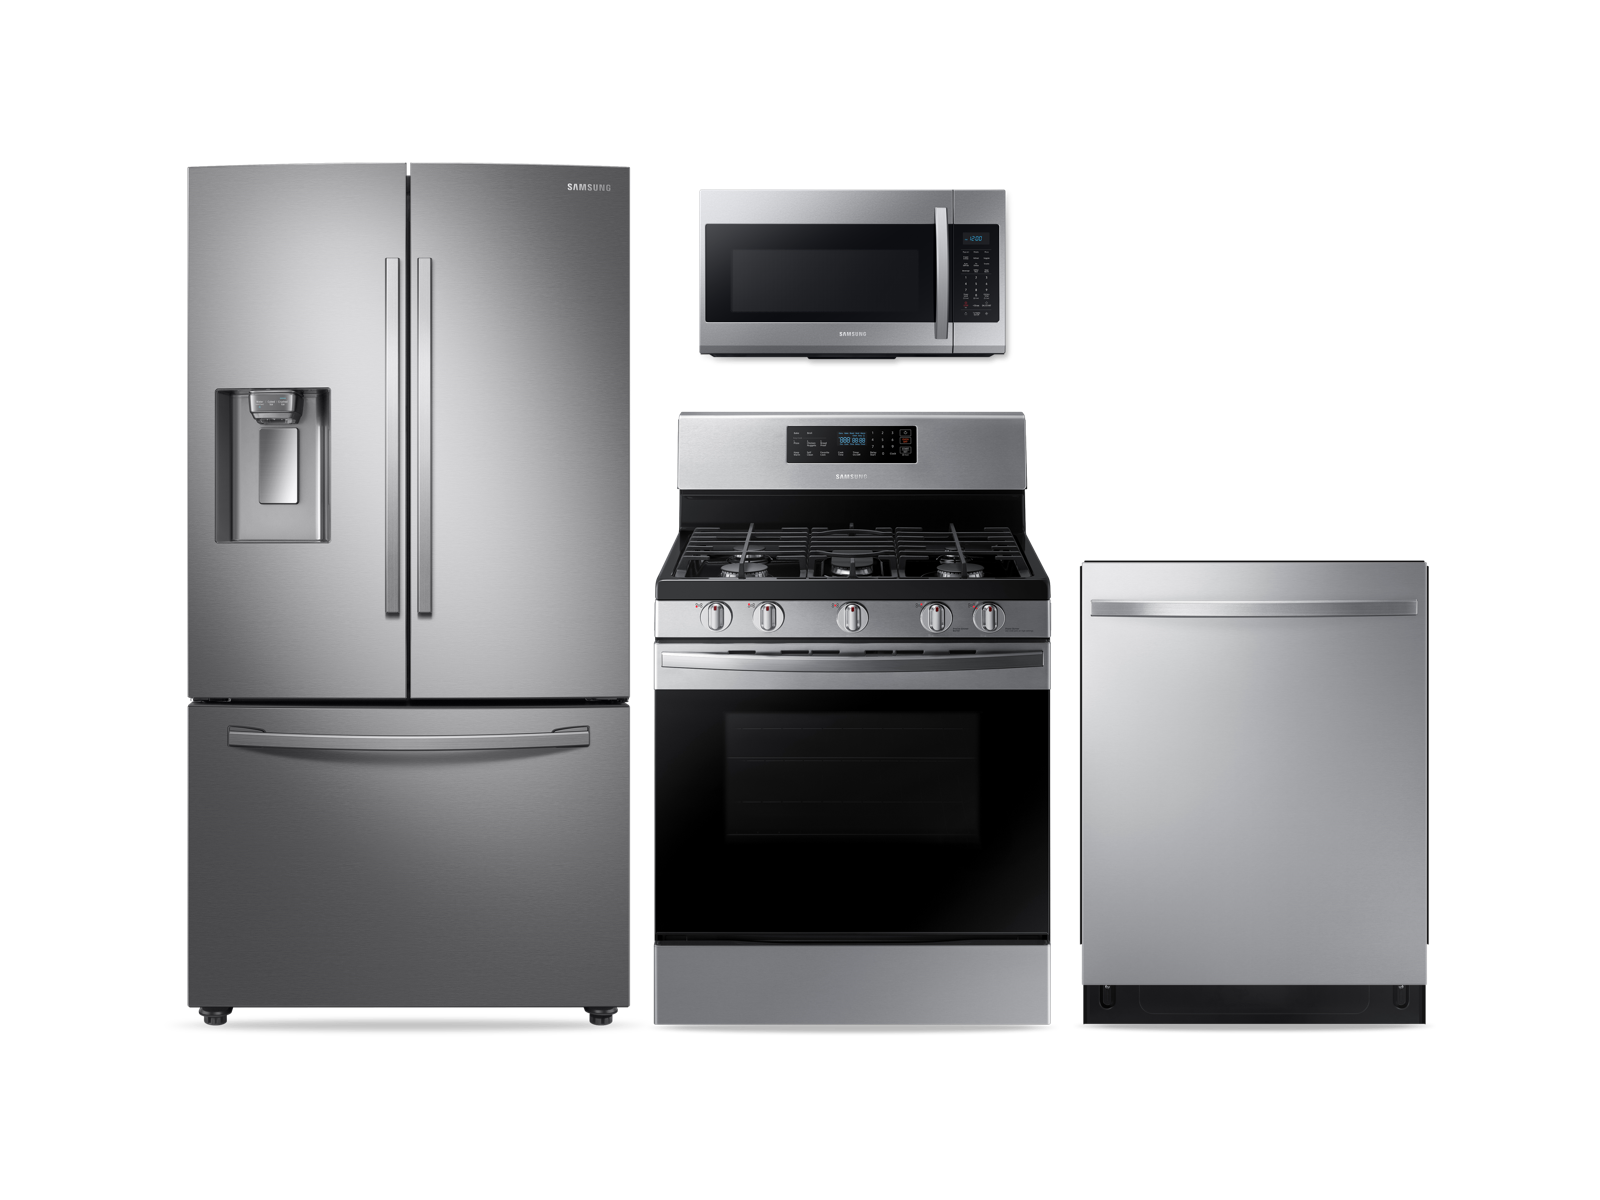 Samsung Large Capacity 3-door Refrigerator + Gas Range + StormWash Dishwasher + Microwave Kitchen Package in Stainless Steel